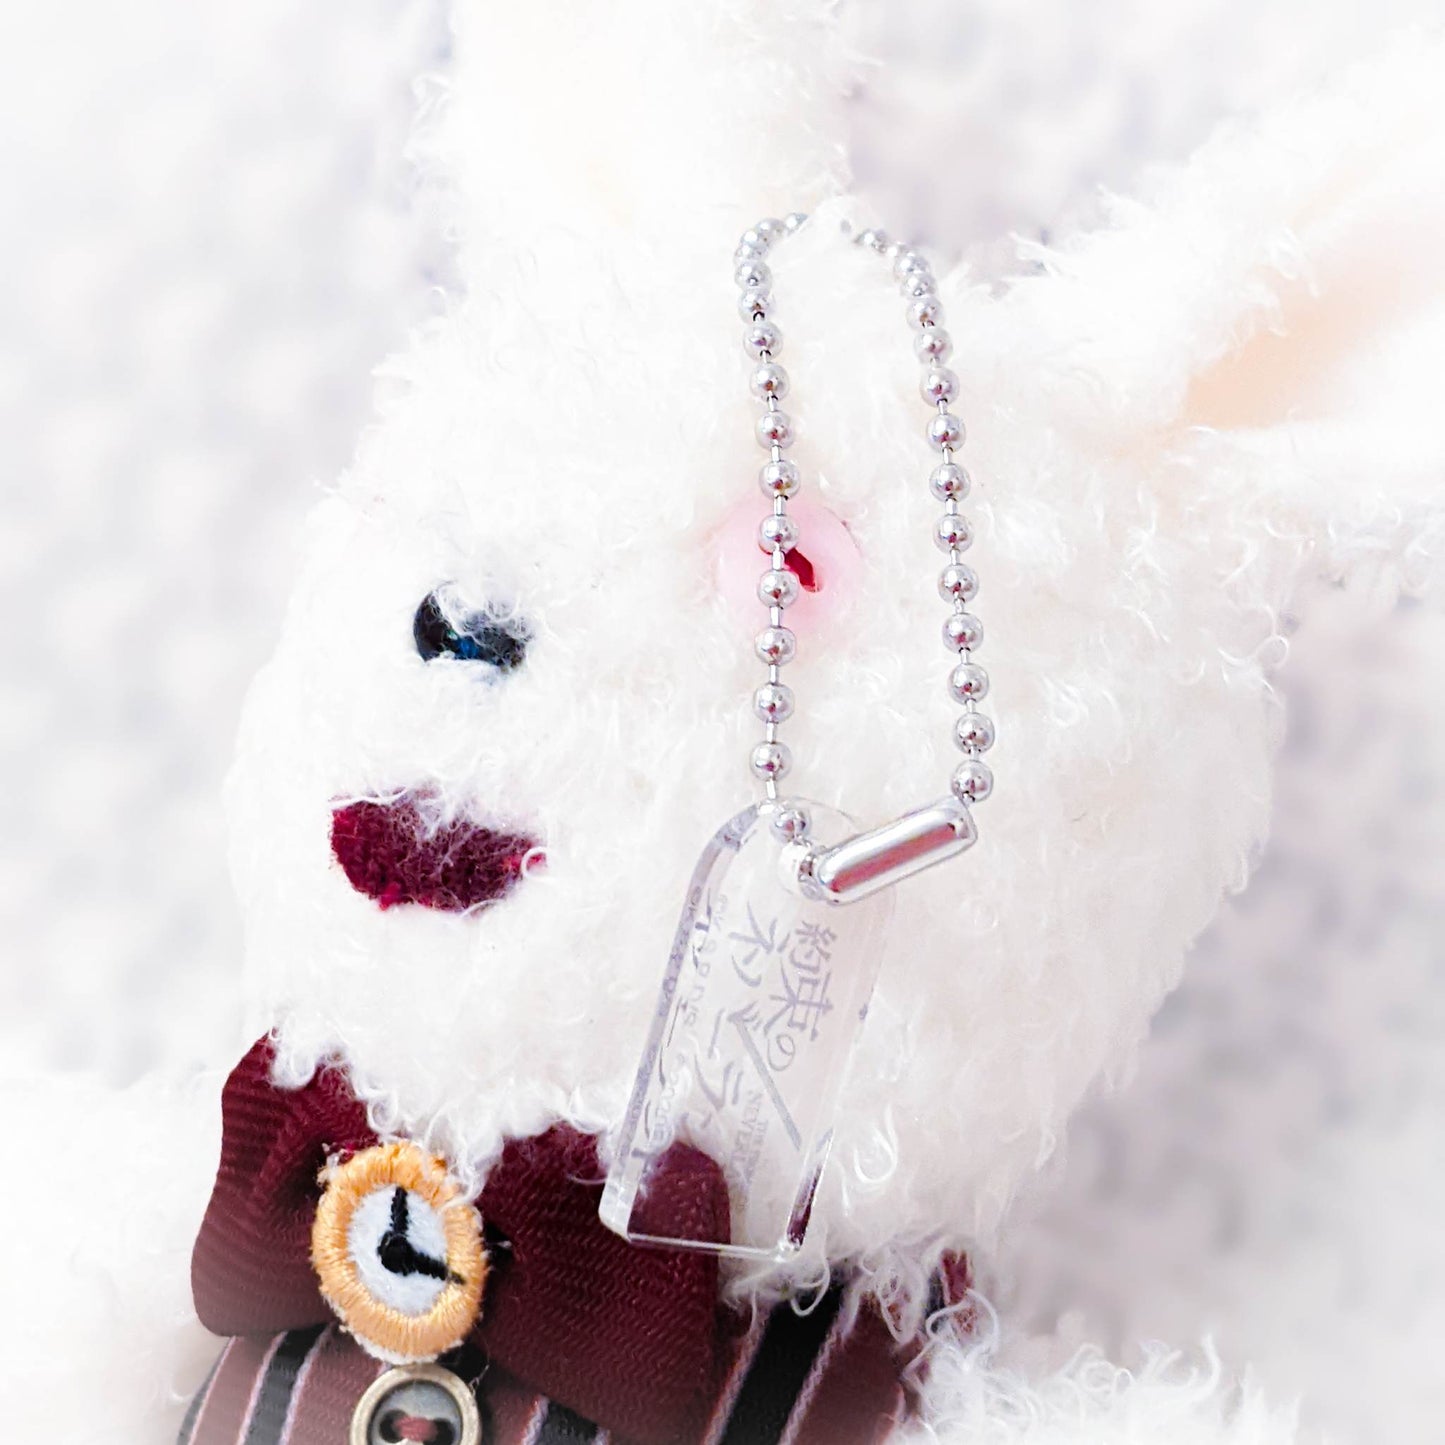 Little Bunny - The Promised Neverland Movie Anime Stuffed Plush Keychain